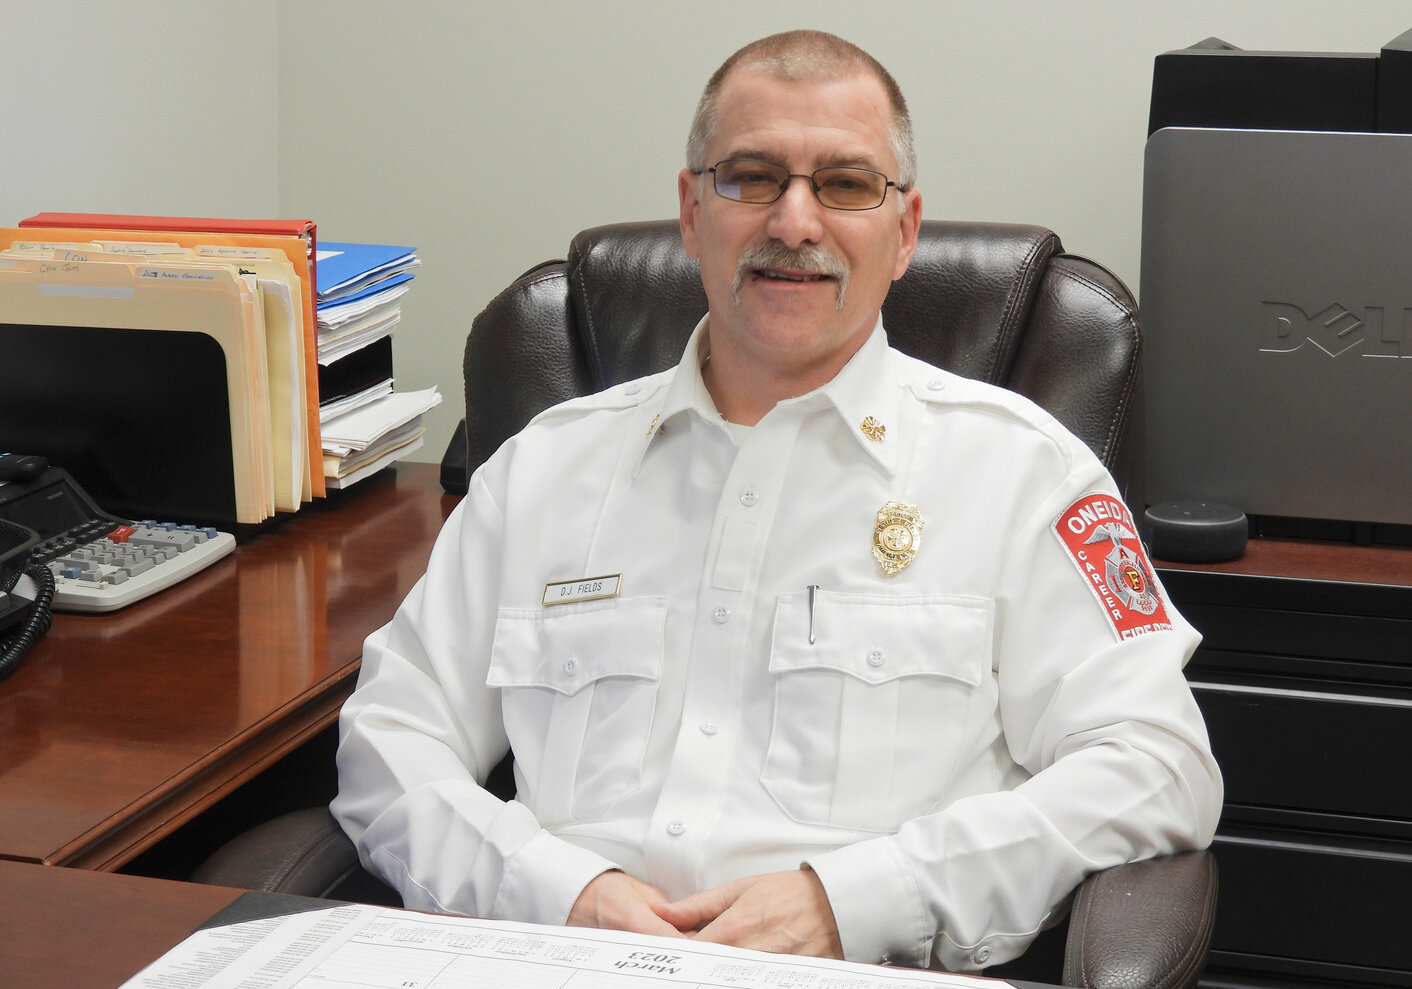 Oneida Fire Chief Dennis Fields